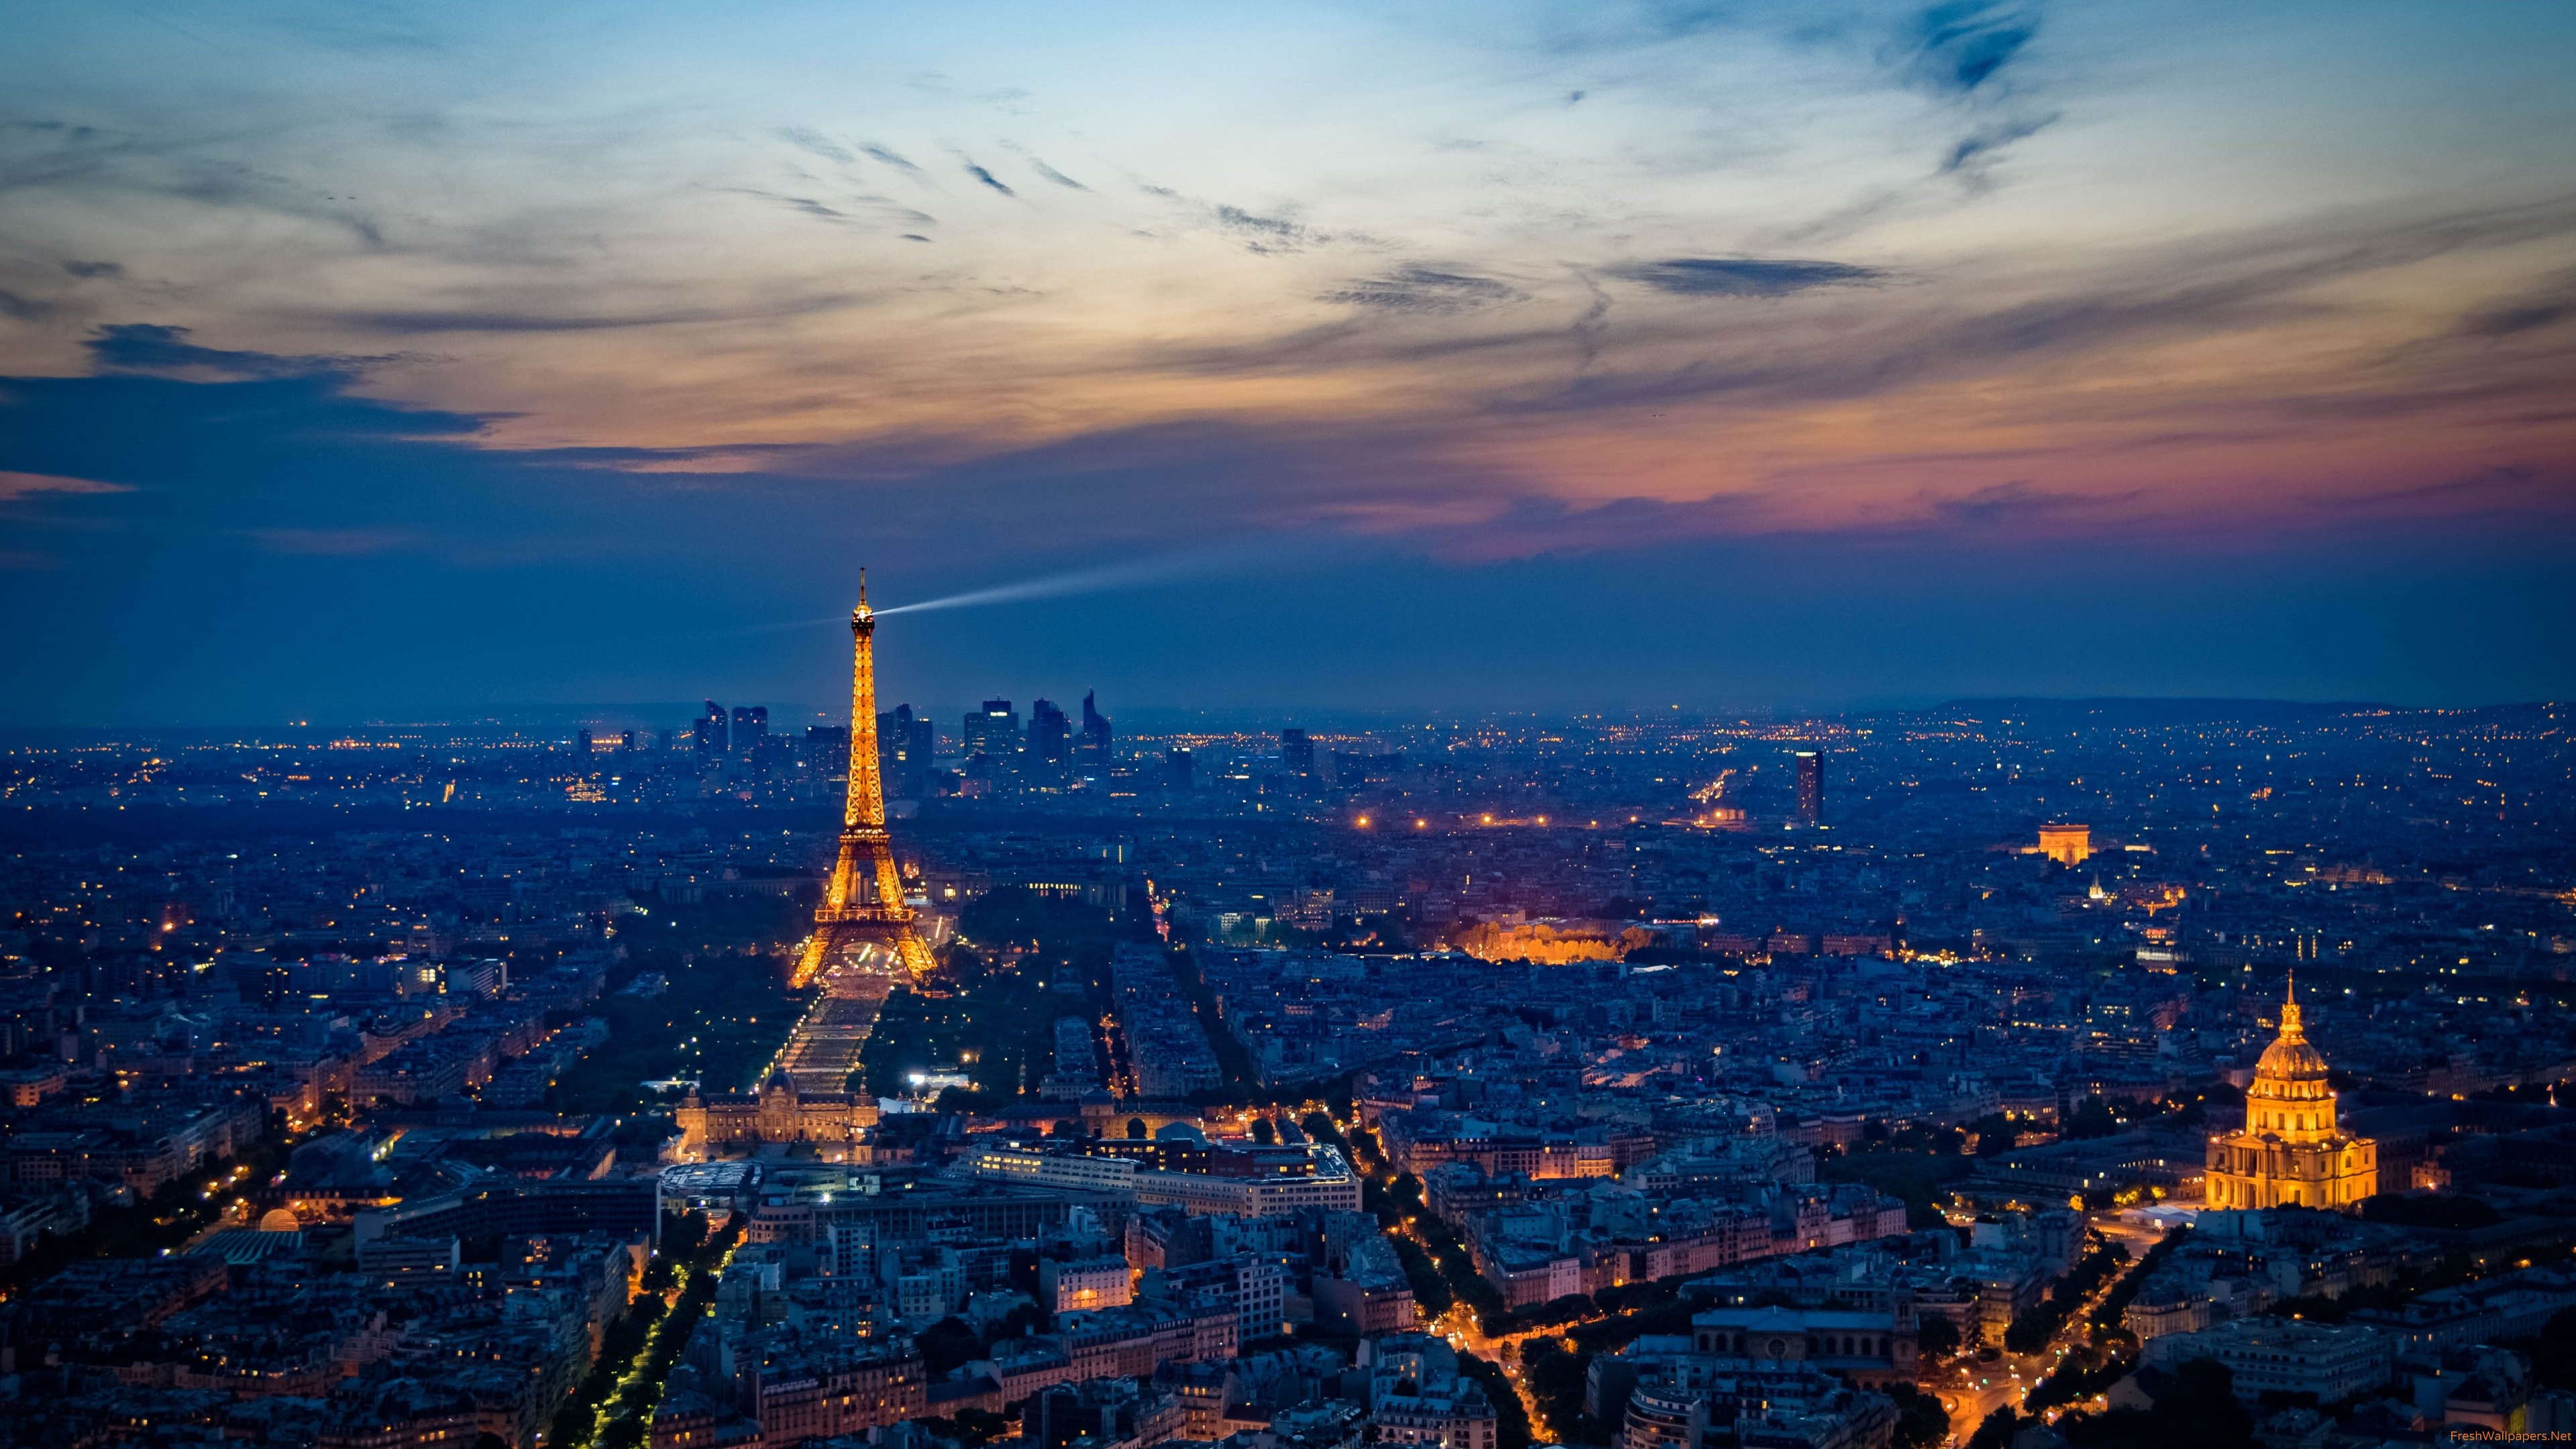 The Paris at Sunset wallpaper